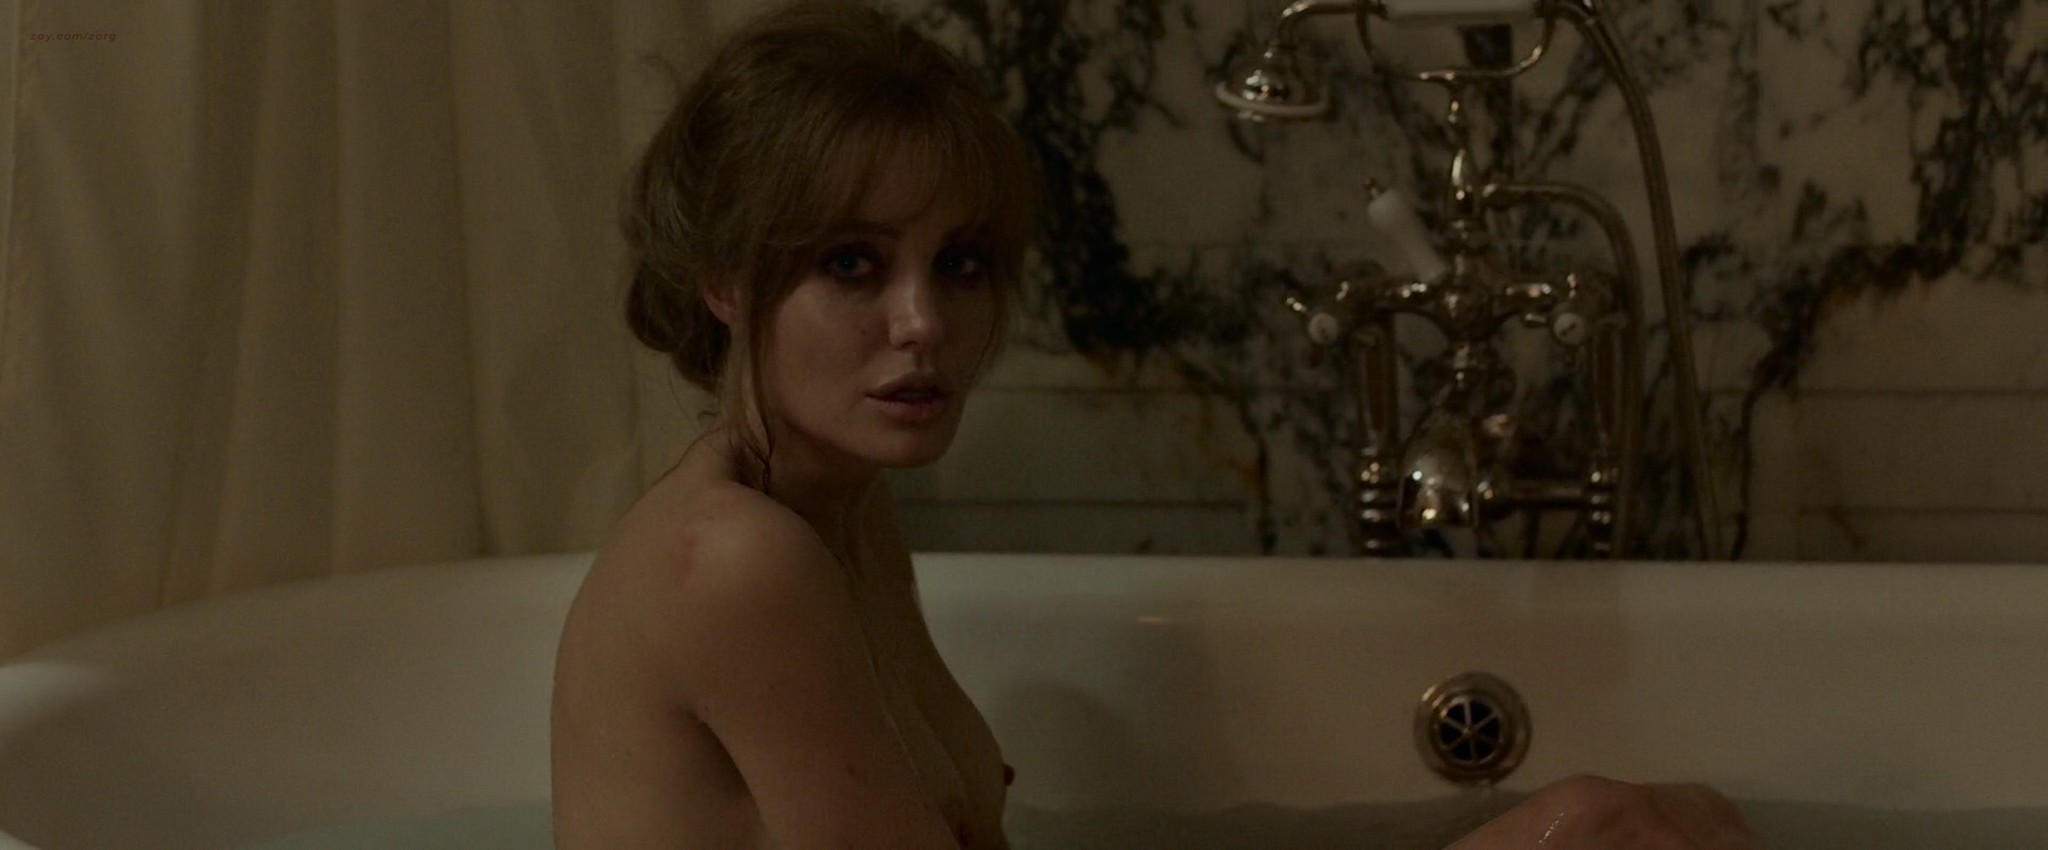 Angelina Jolie topless in the bath having sex #75146878